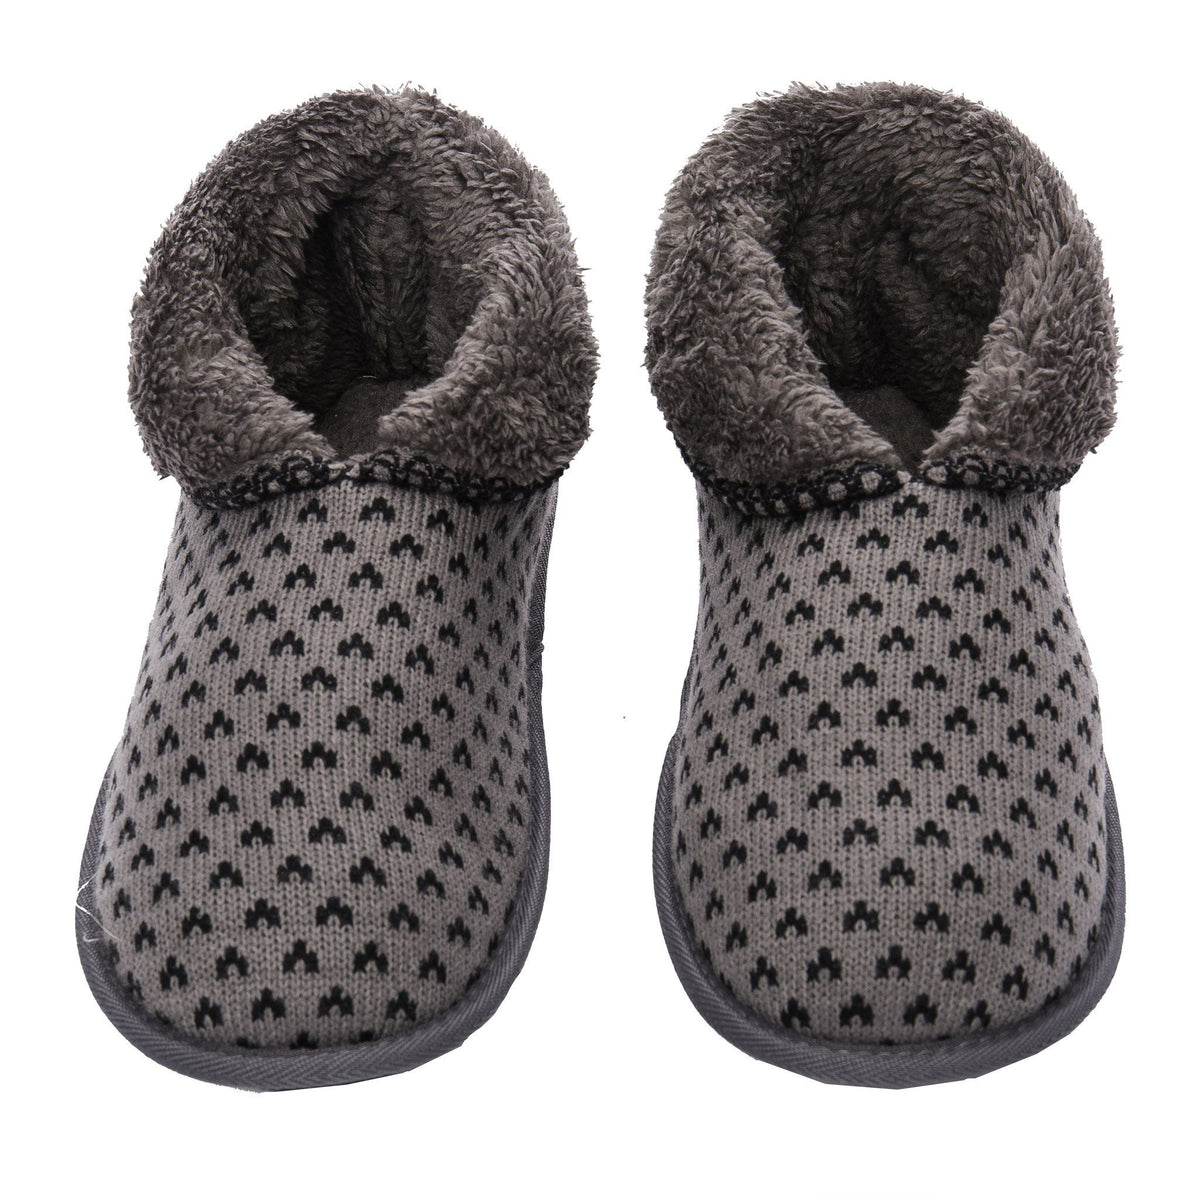 Men's Premium Knit Short Boot Slipper - Charcoal/Black